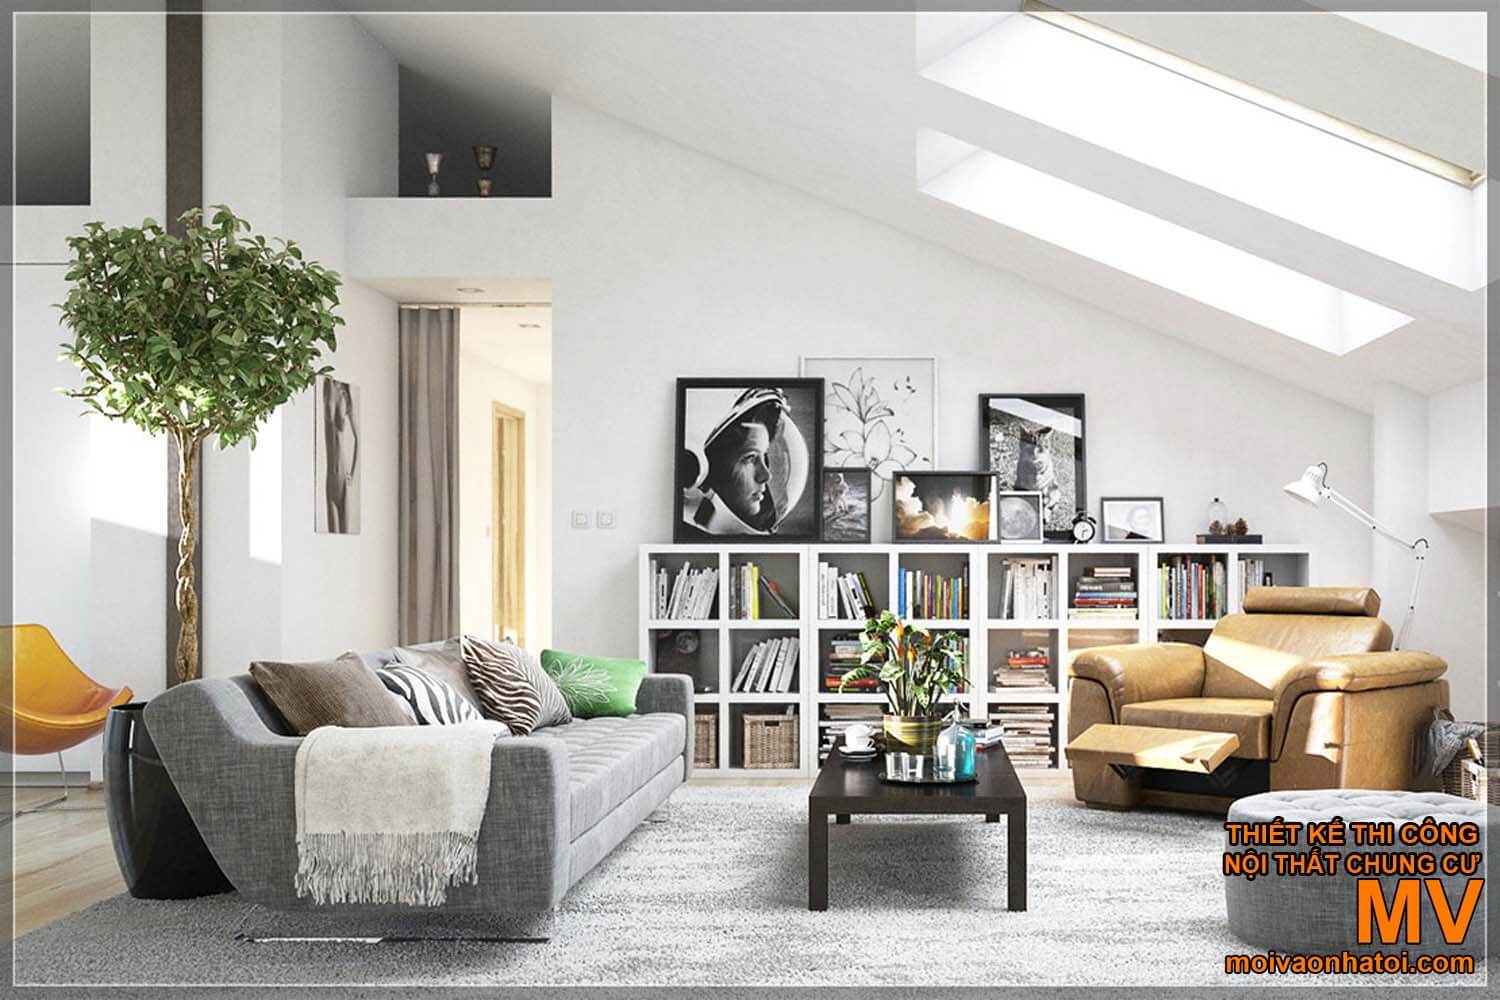 interior design of beautiful home space